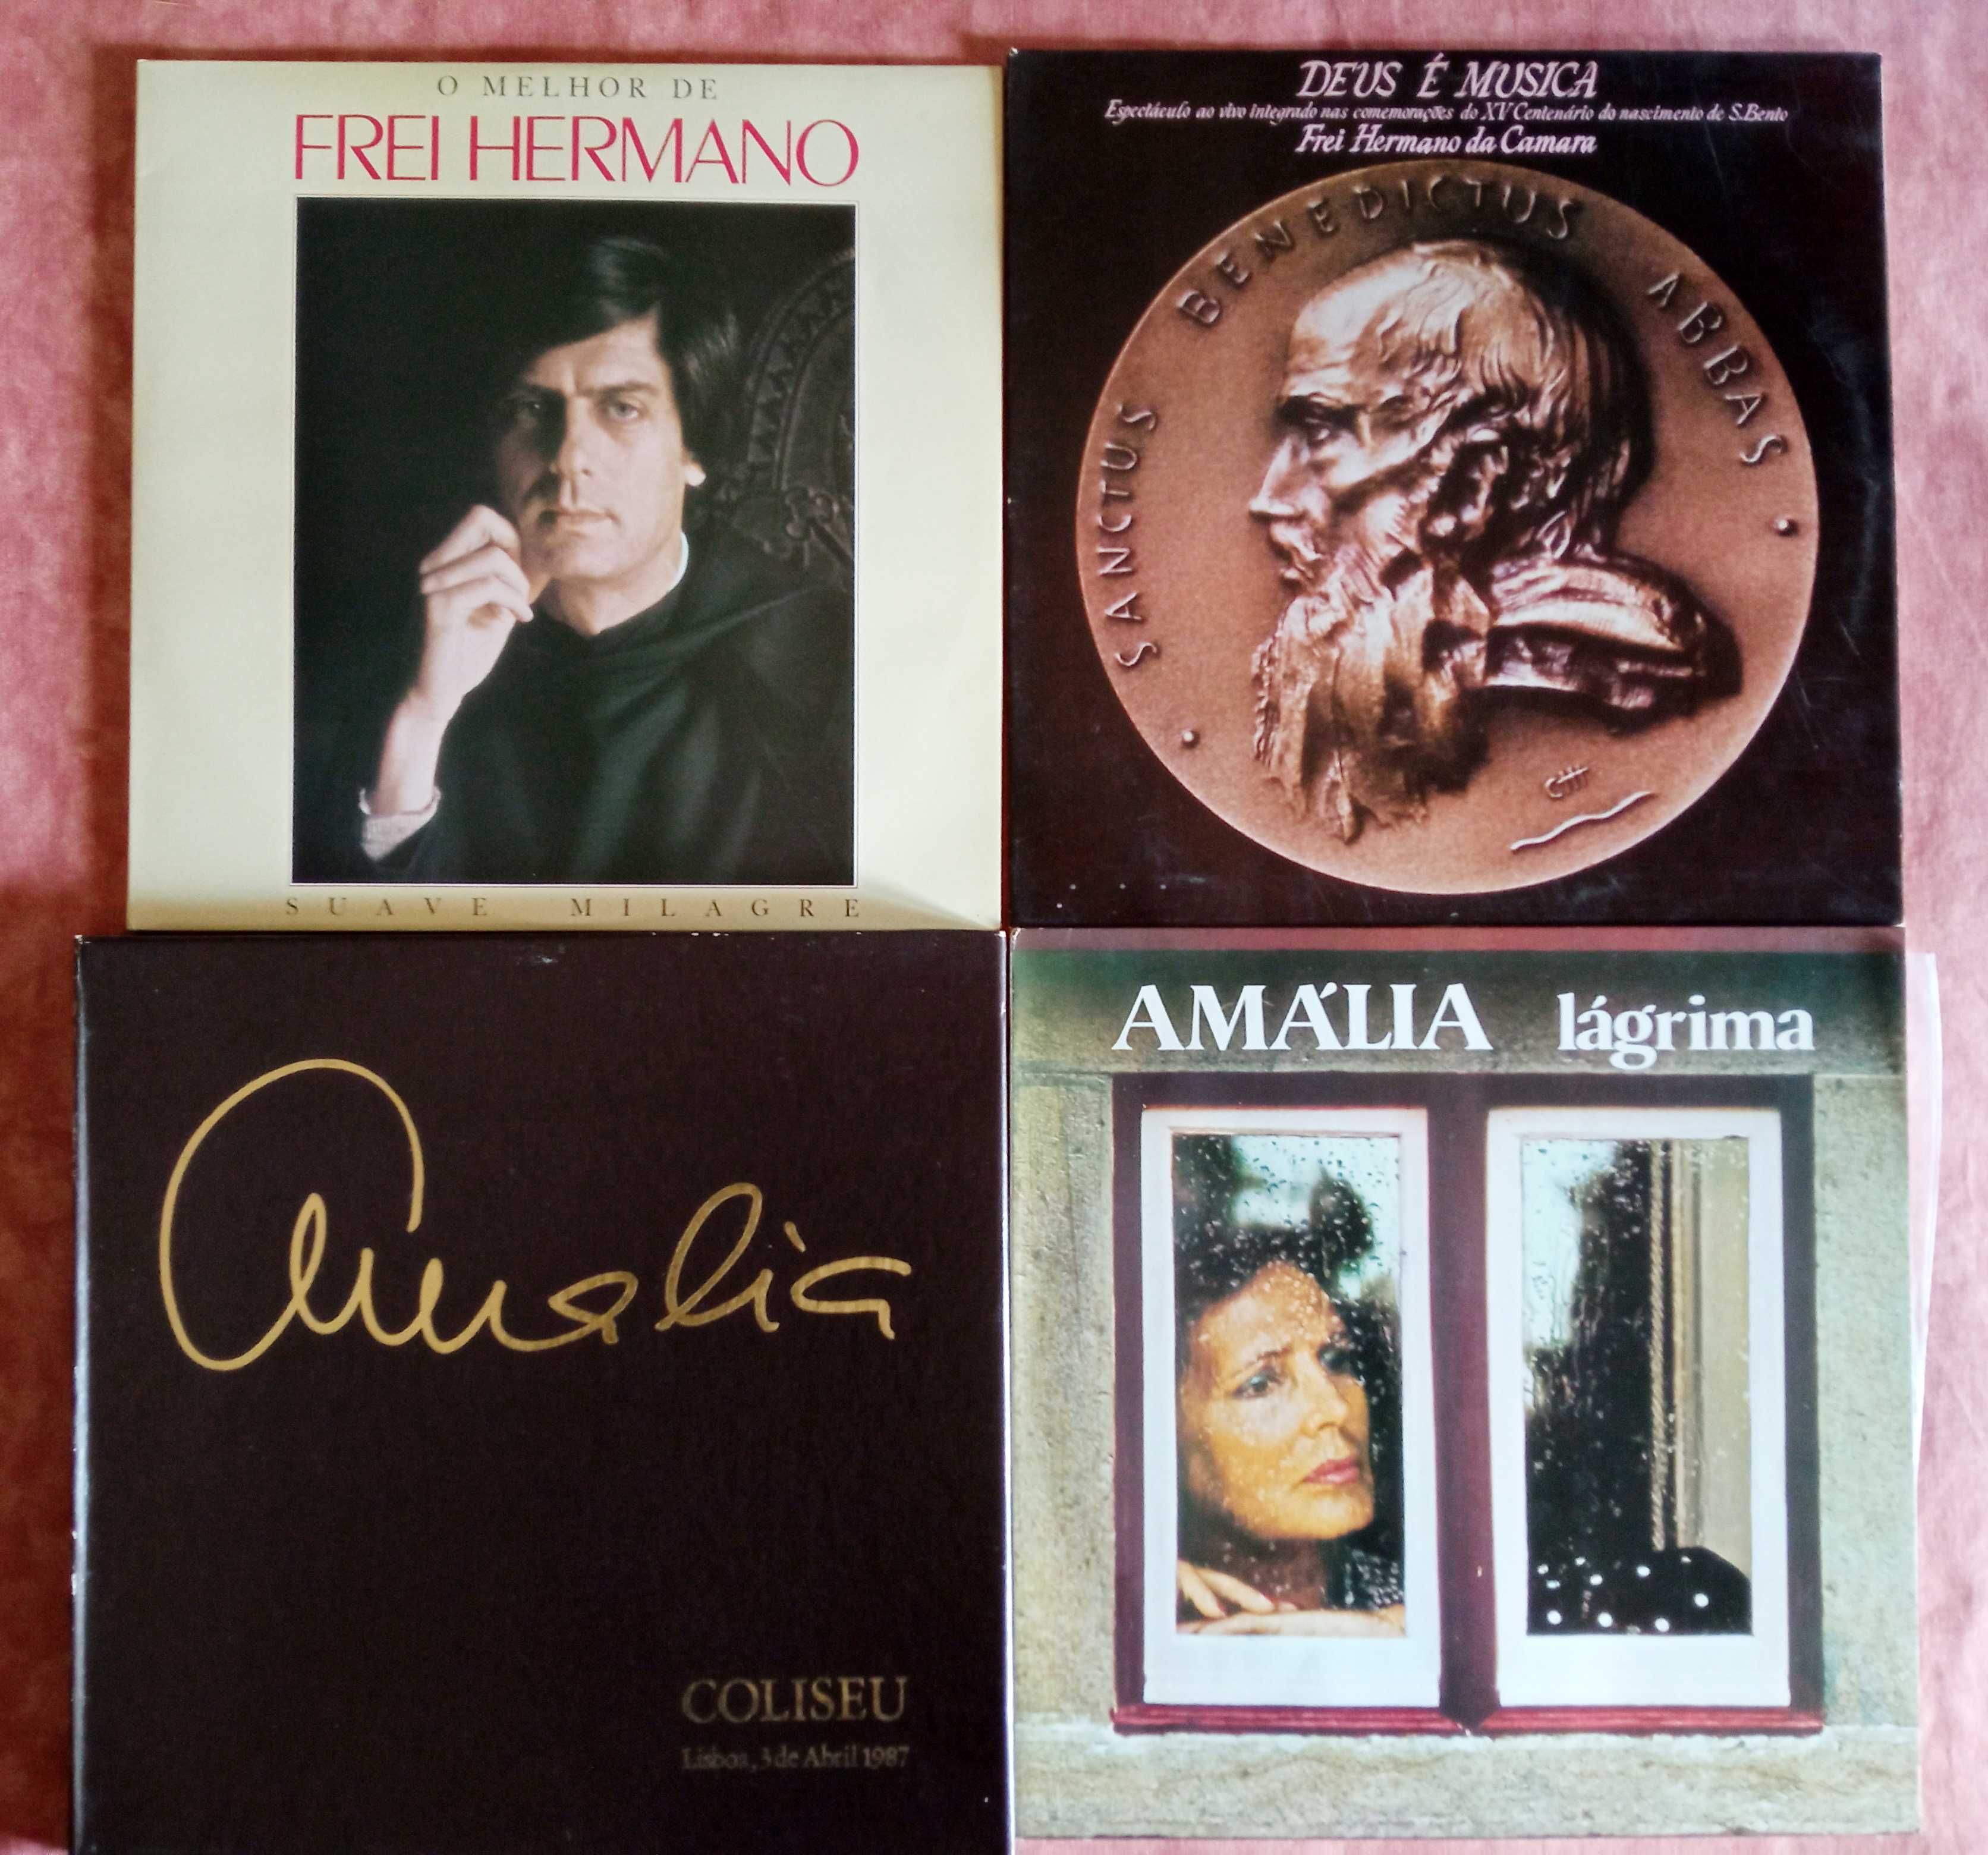 Discos LP artistas portugueses